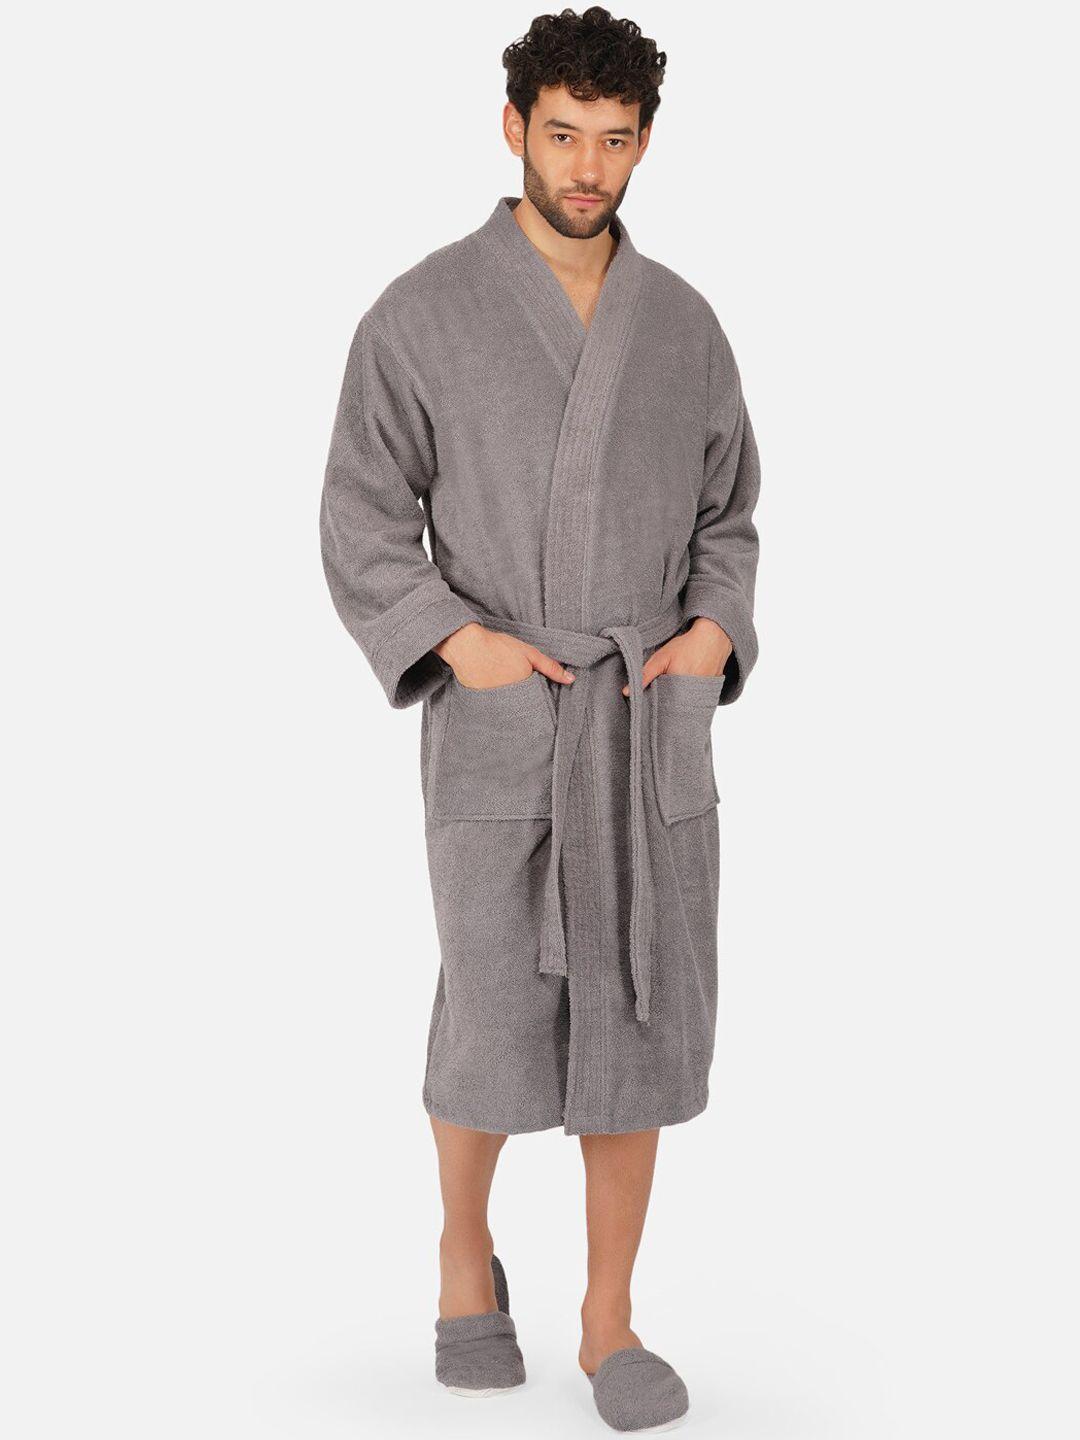 RANGOLI Unisex Grey Pure Cotton 400 GSM Large Bath Robe with Slippers